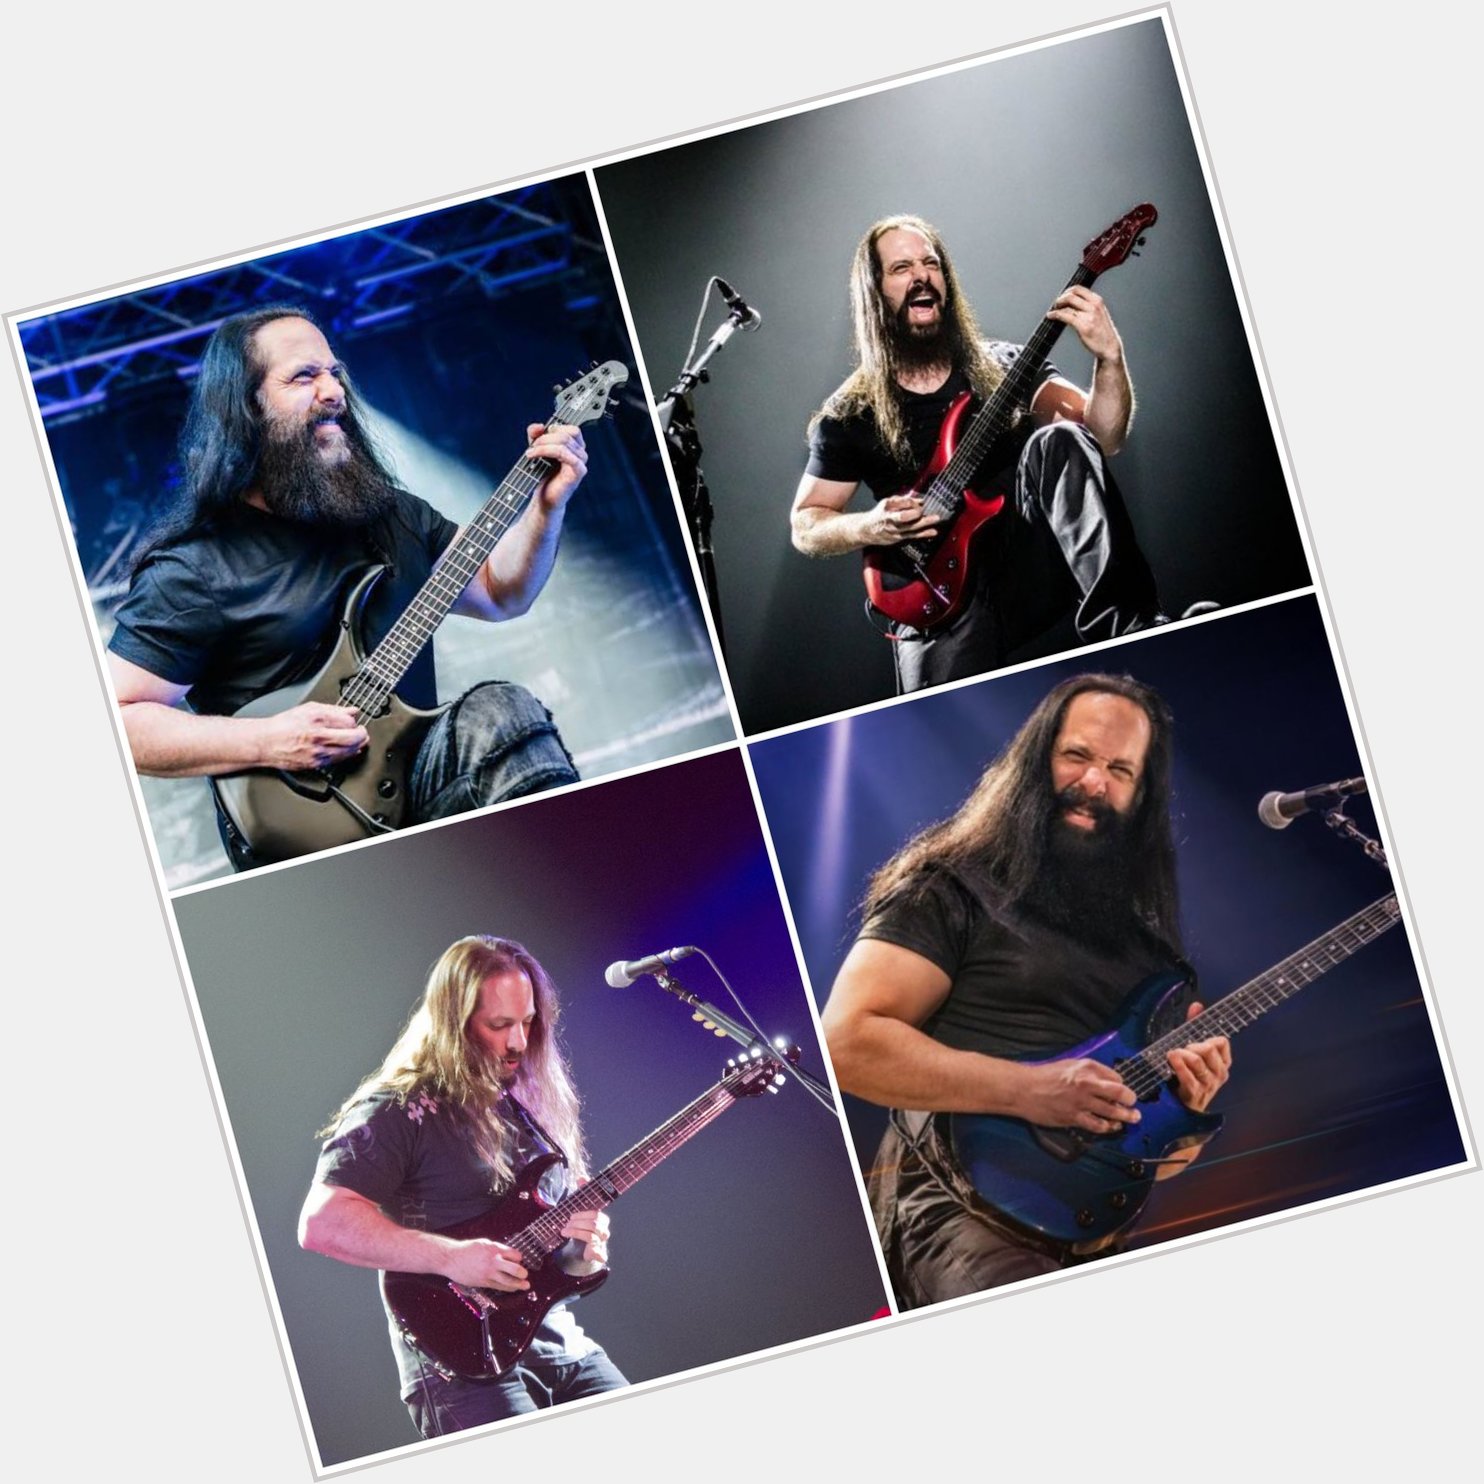   * 12.7.1967
Happy birthday
John Petrucci    